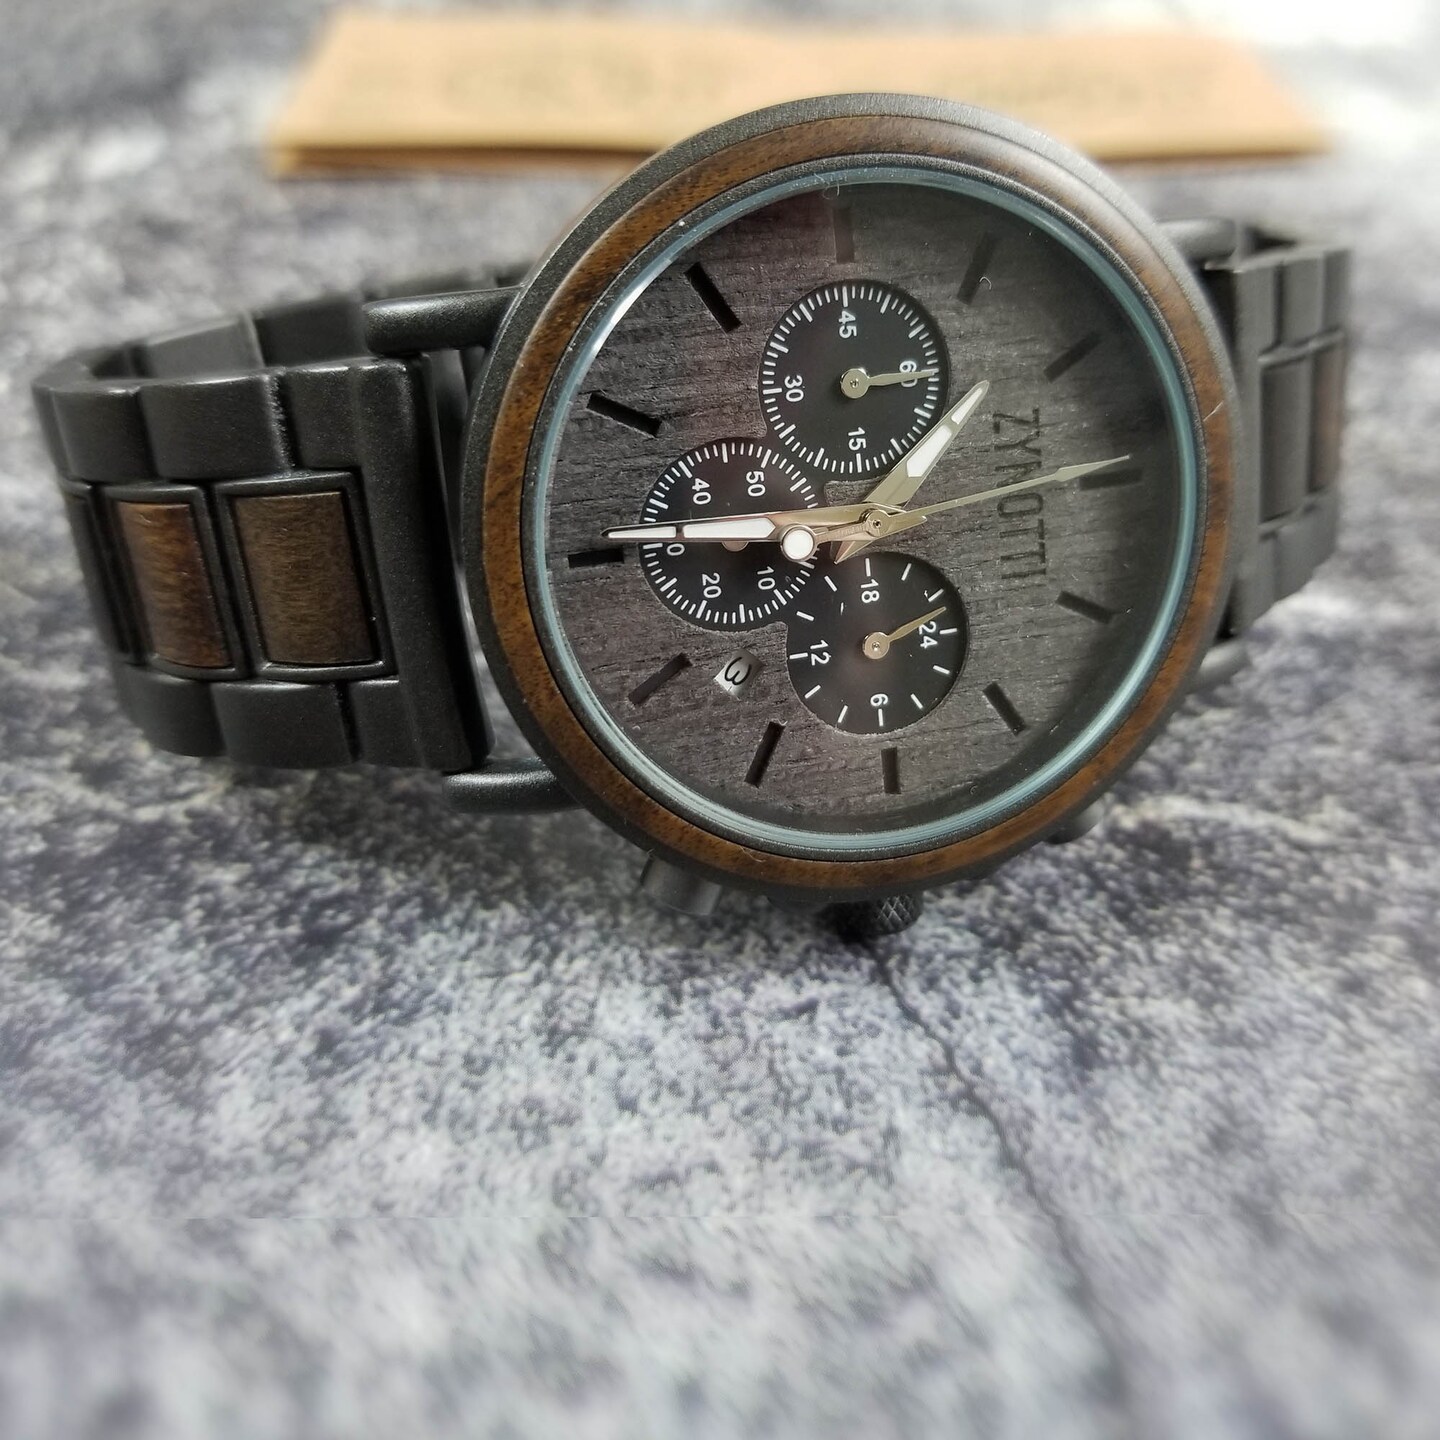 Mechanical Watches Stainless Steel Practical Gifts Wristwatch Male Bracelts  Chain for Boyfriend Husband Men's Watch Gift Set - AliExpress